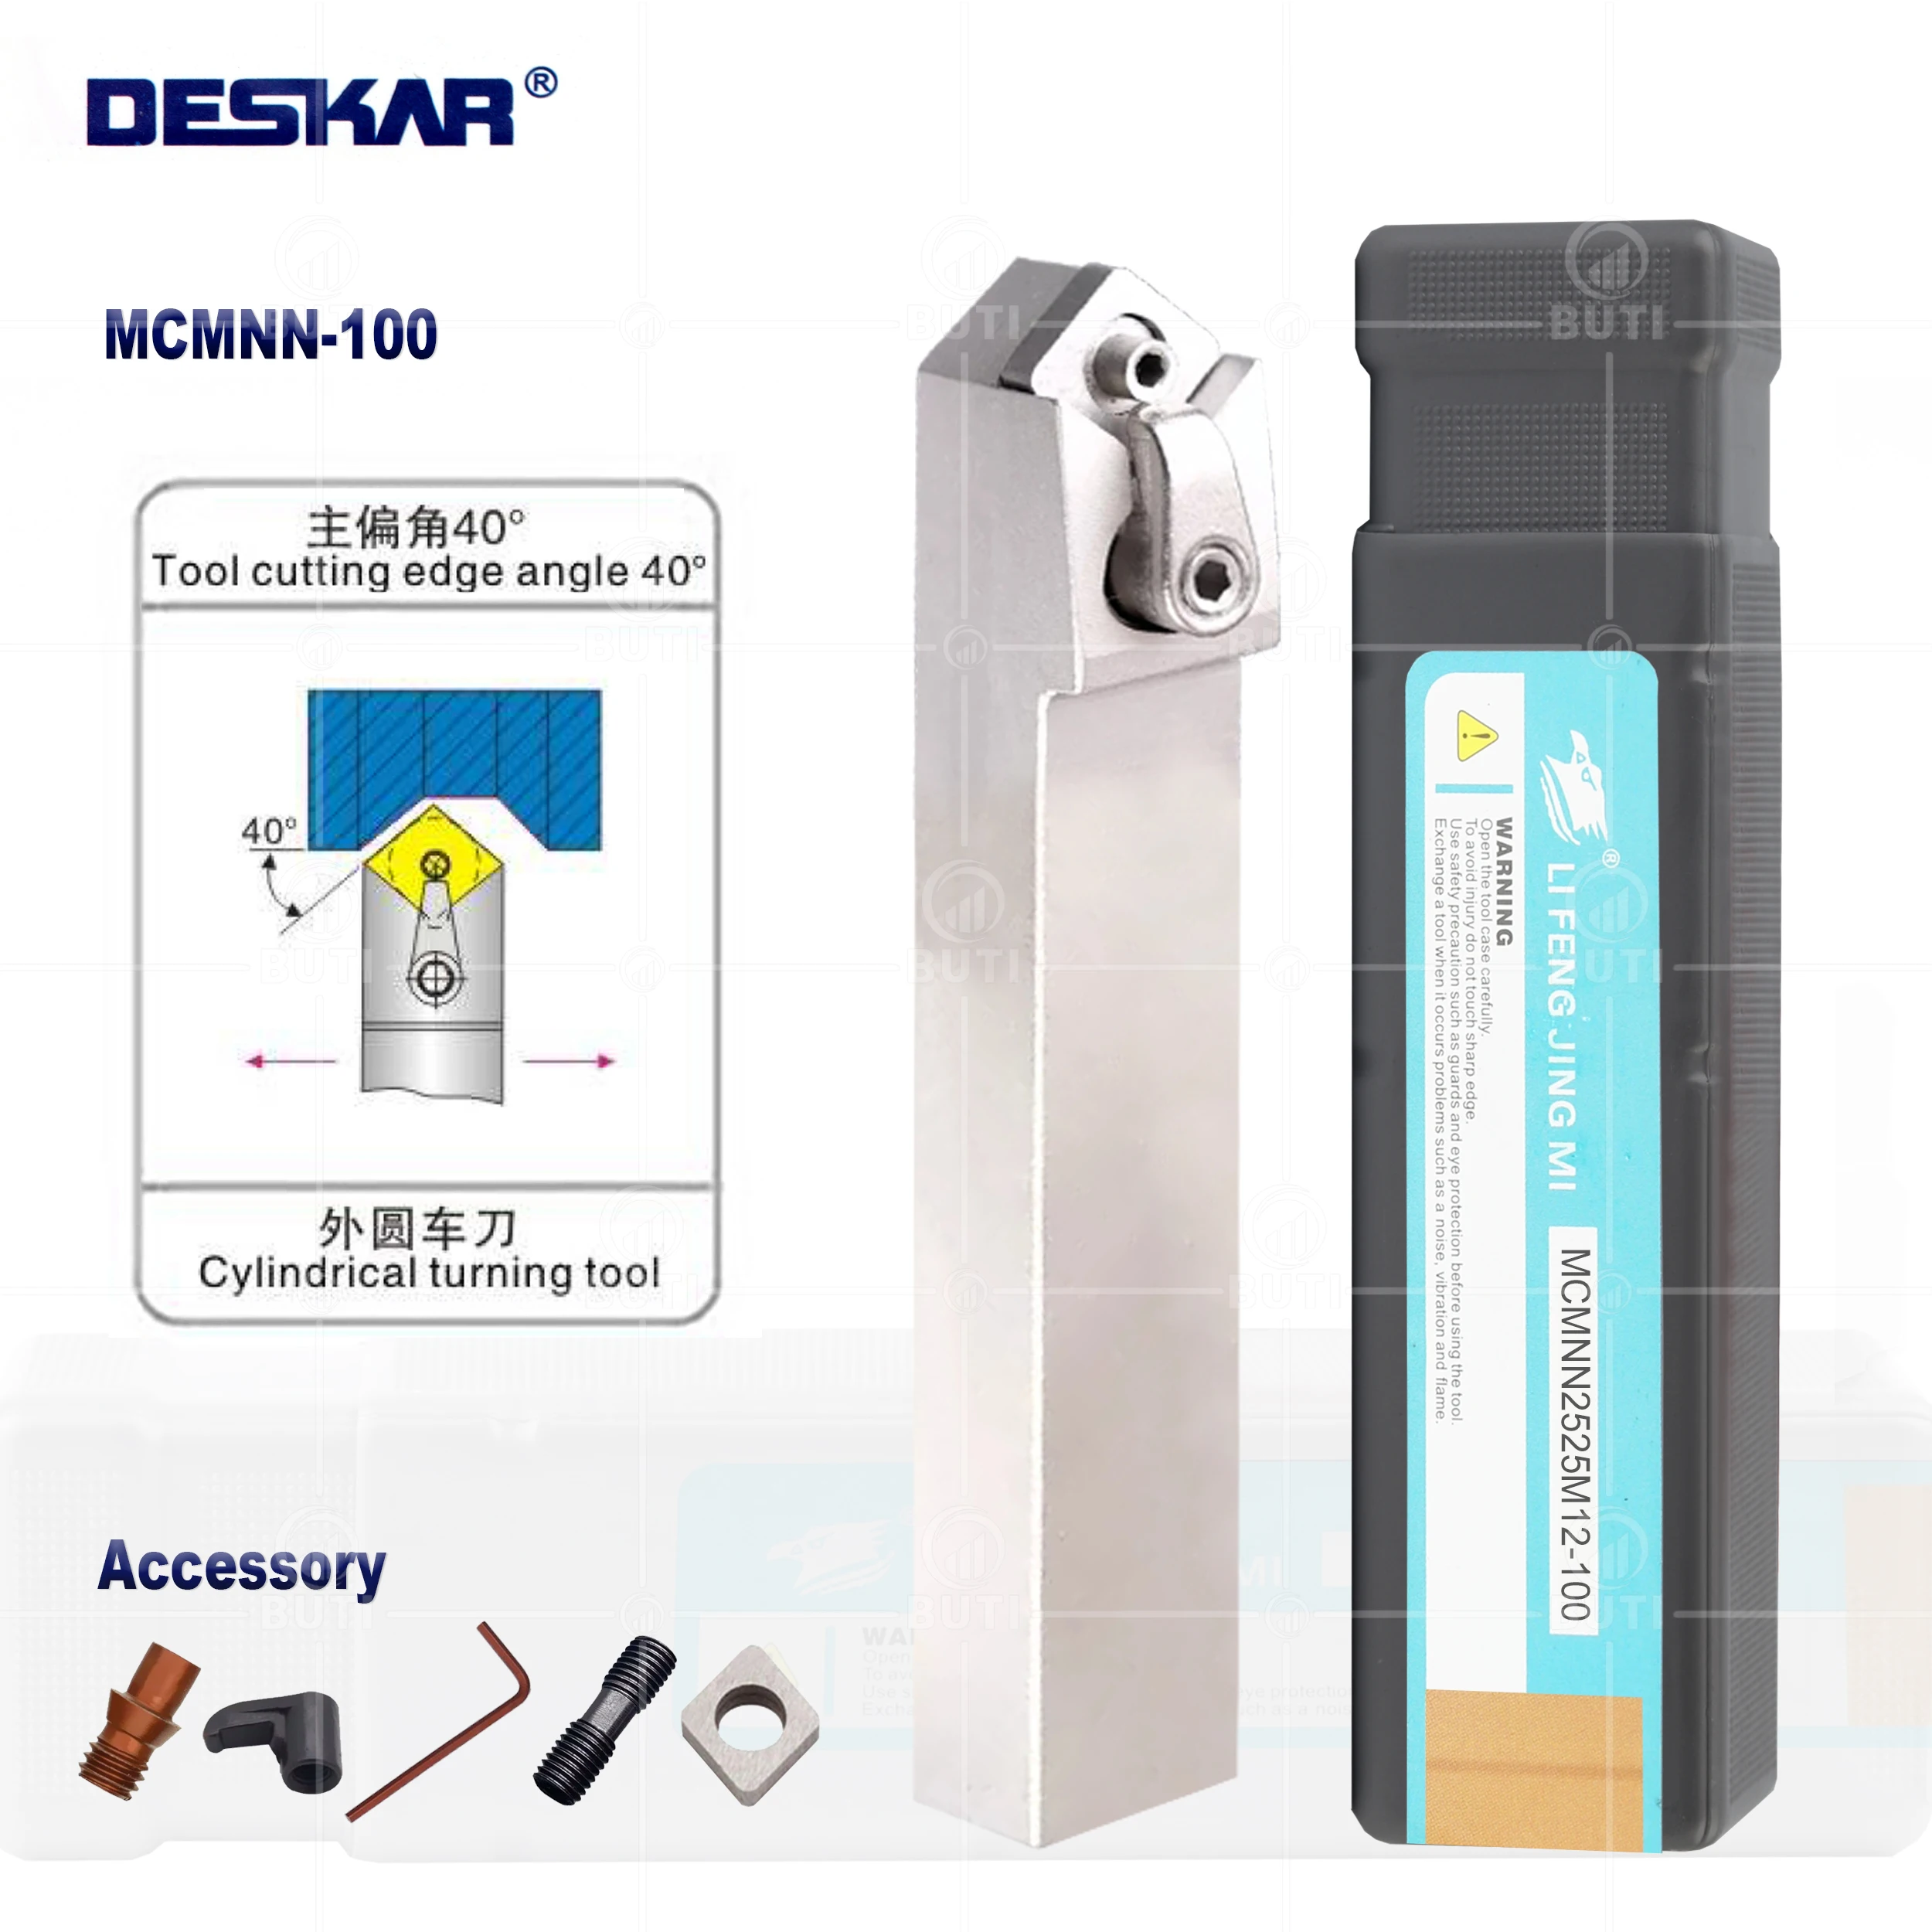 DESKAR 100% מקורי MCMNN2020K12-100 מחרטה MCMNN2525M12-100 חיצוני מפנה כלים לבן בעל חיתוך CNC Cutter משעמם בר